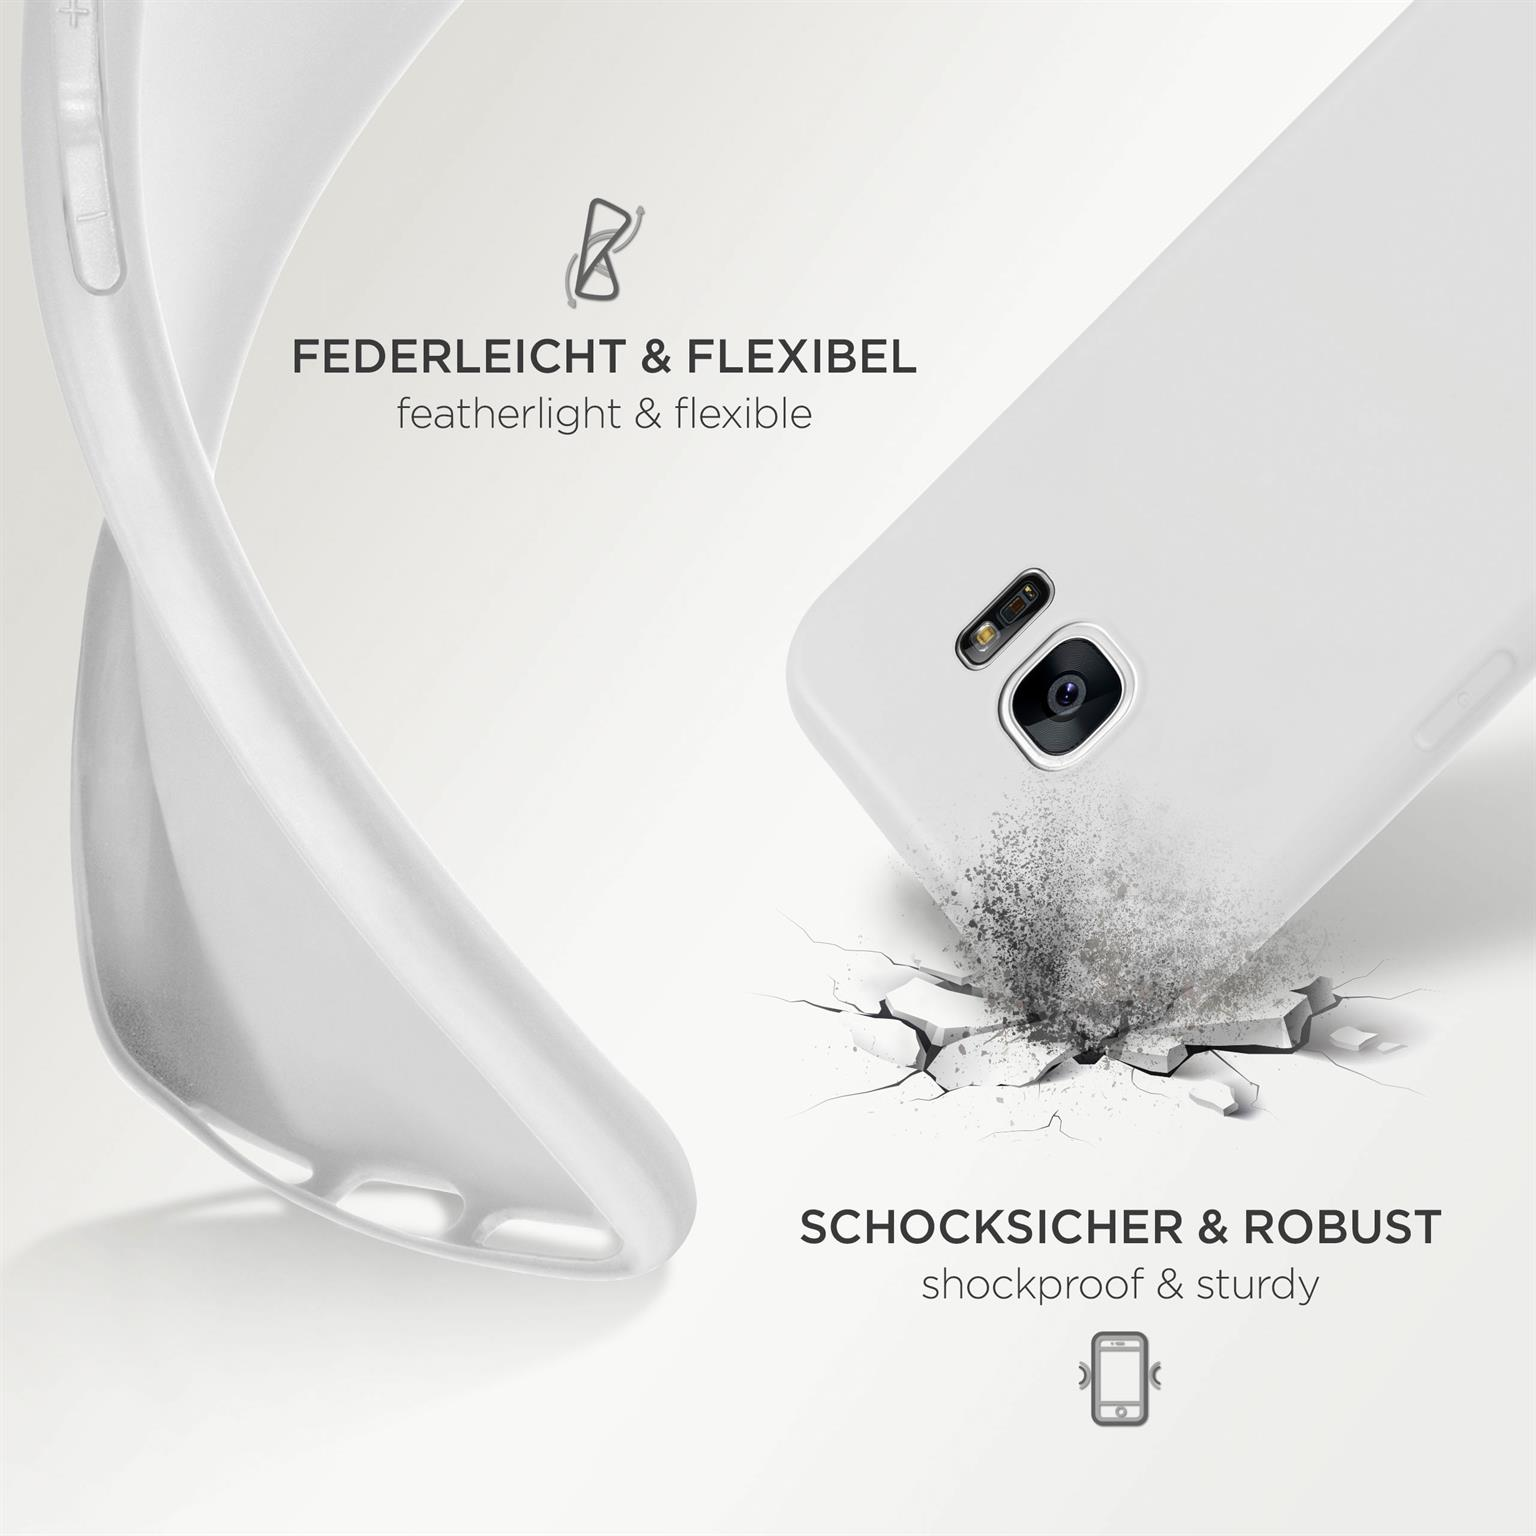 ONEFLOW SlimShield Pro Case, Backcover, Galaxy Weiß S7 Edge, Samsung